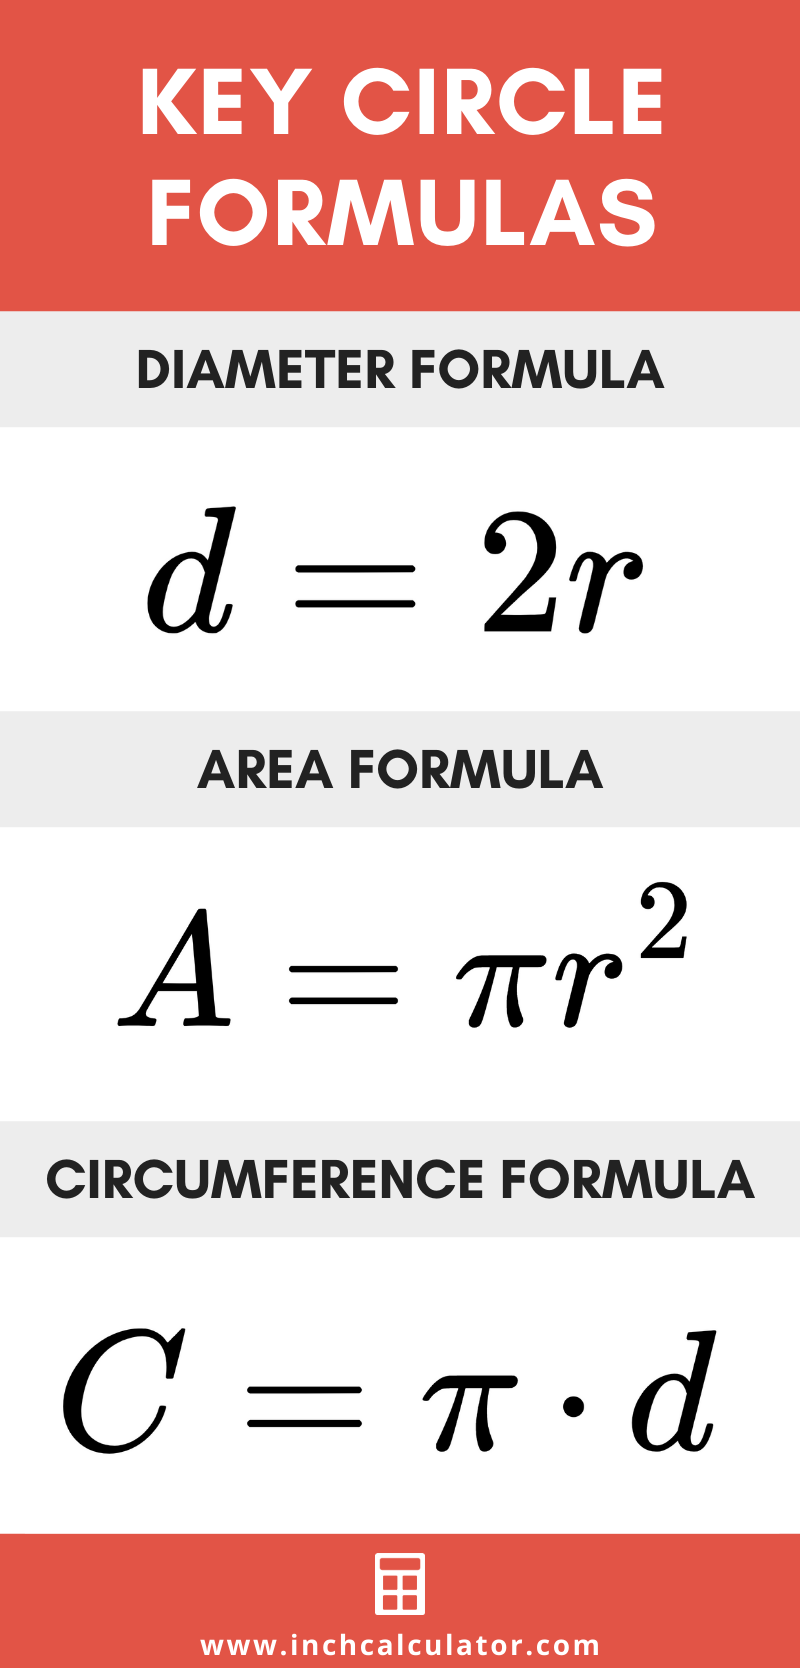 Share circle calculator – find radius, circumference, & area